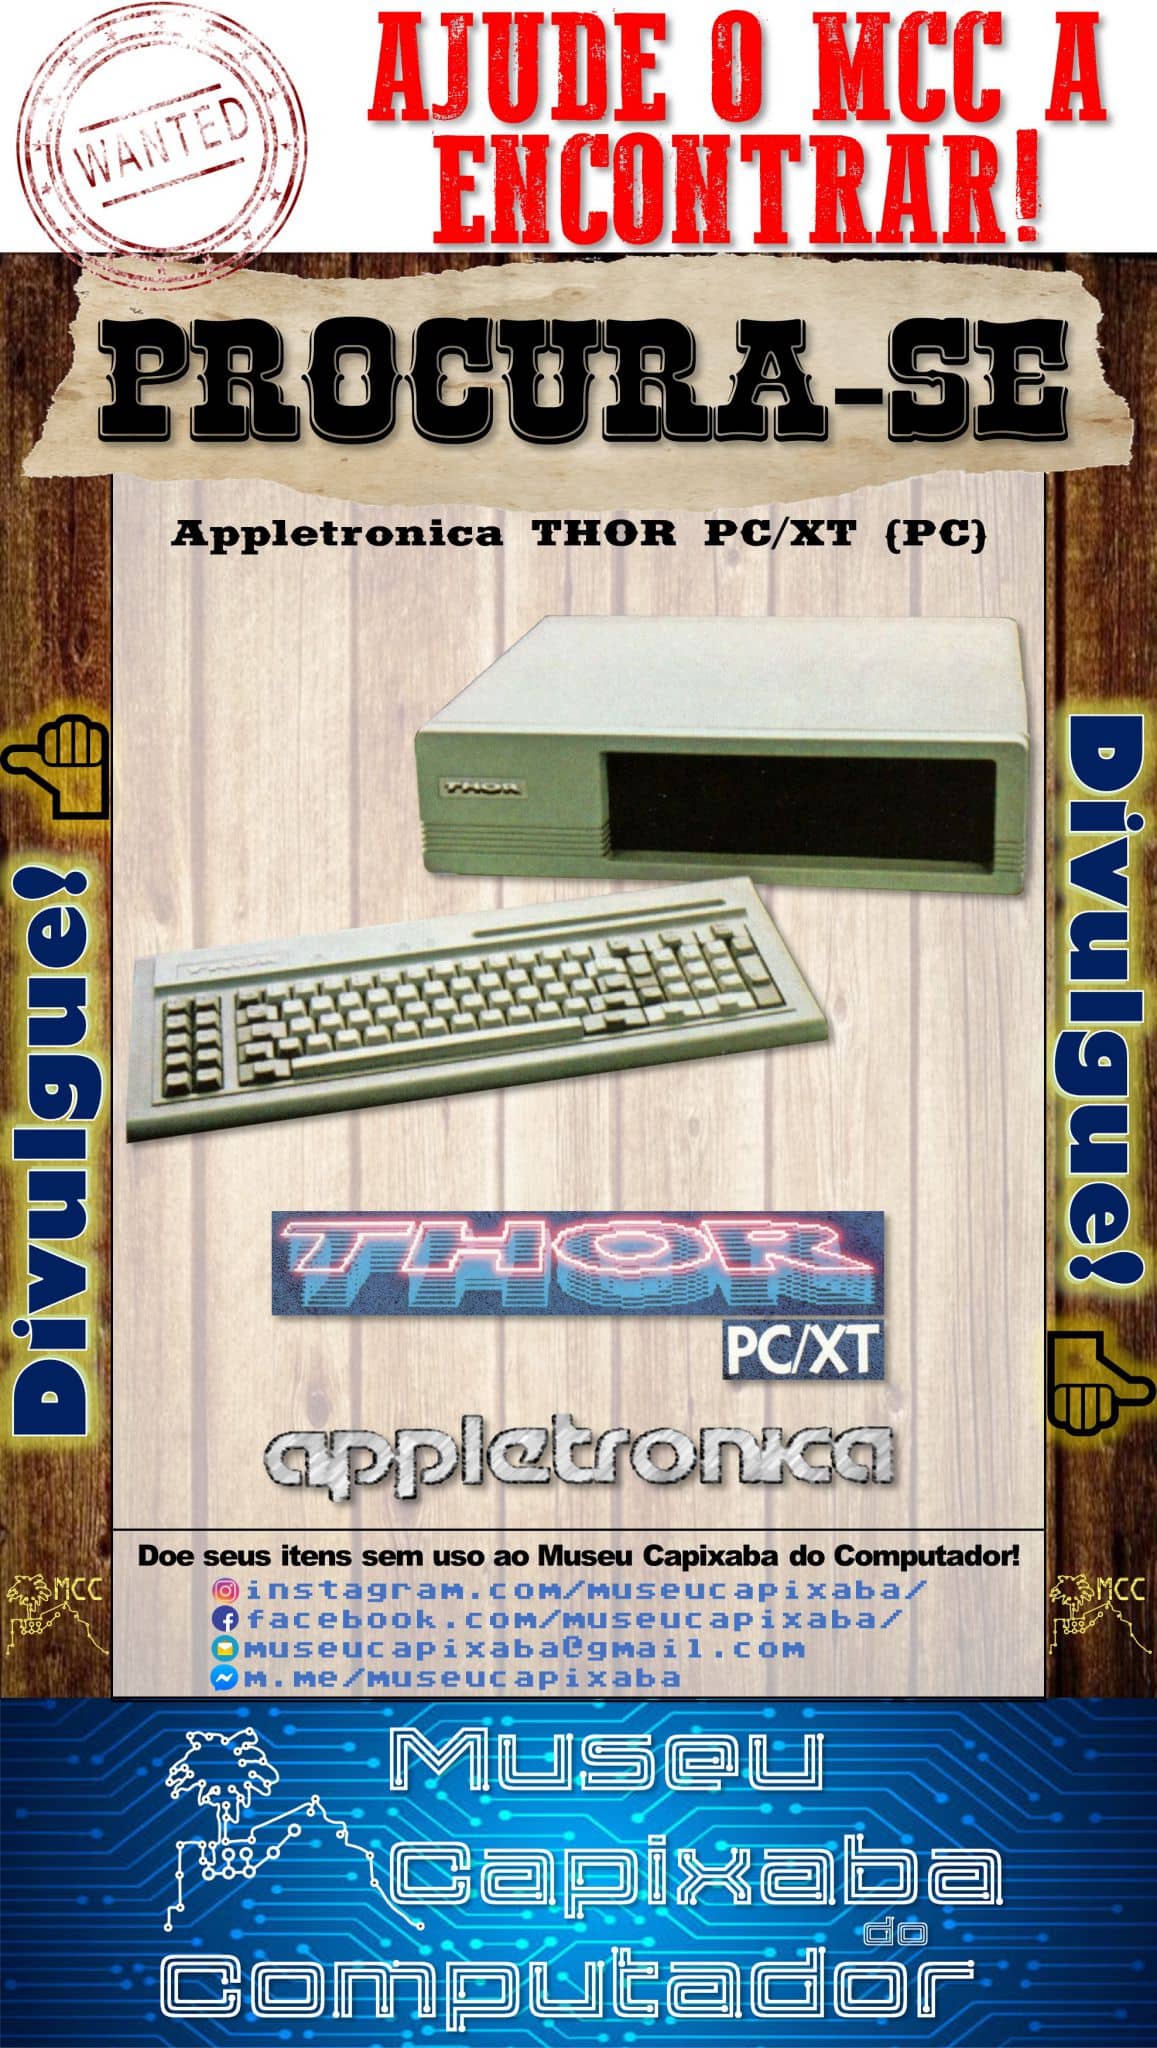 Appletronica Thor PCXT